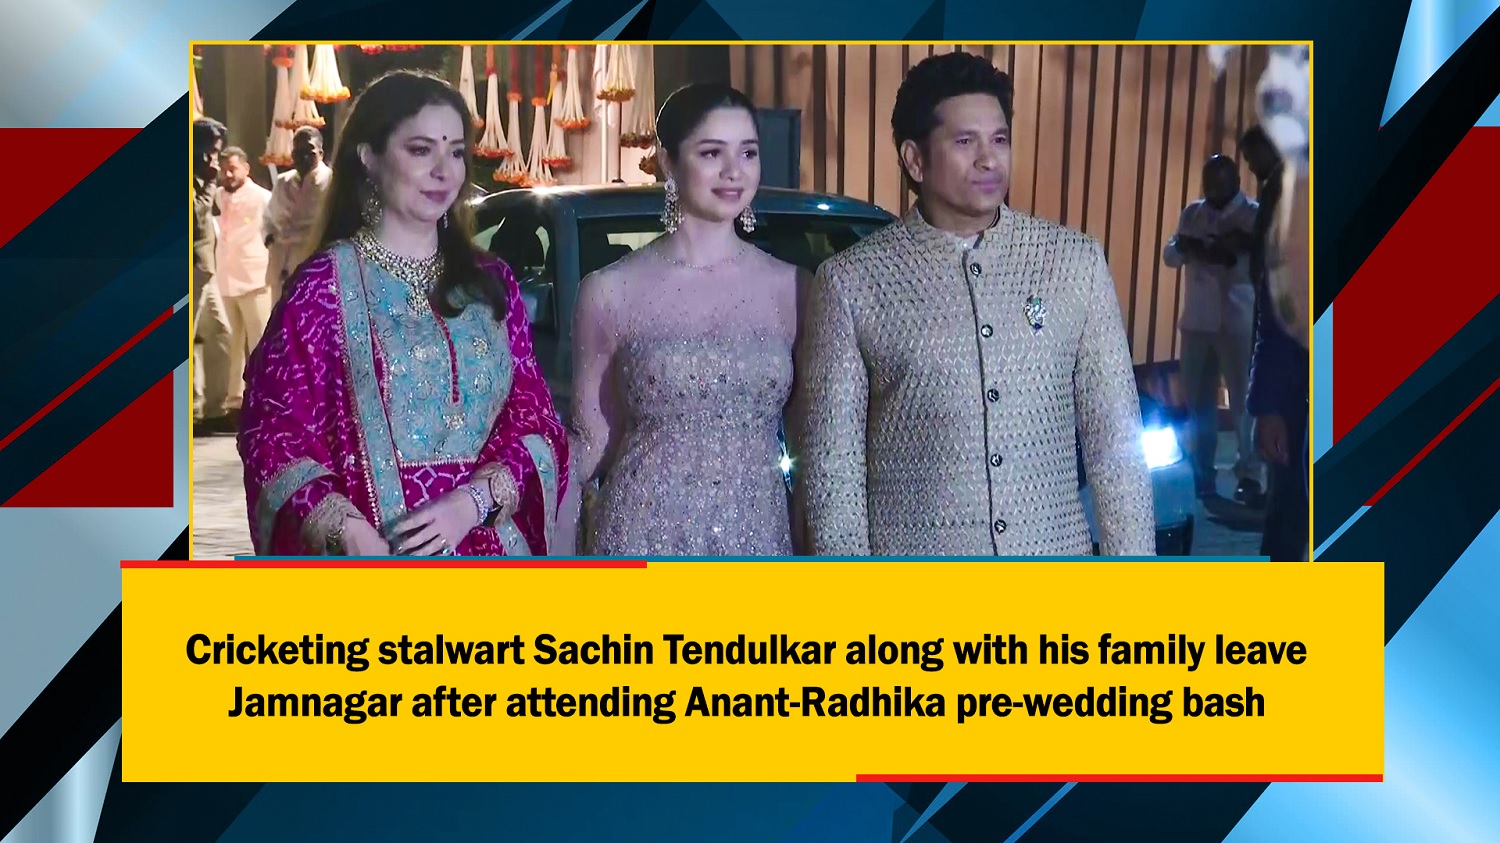 Cricketing stalwart Sachin Tendulkar along with his family leave Jamnagar after attending Anant-Radhika pre-wedding bash